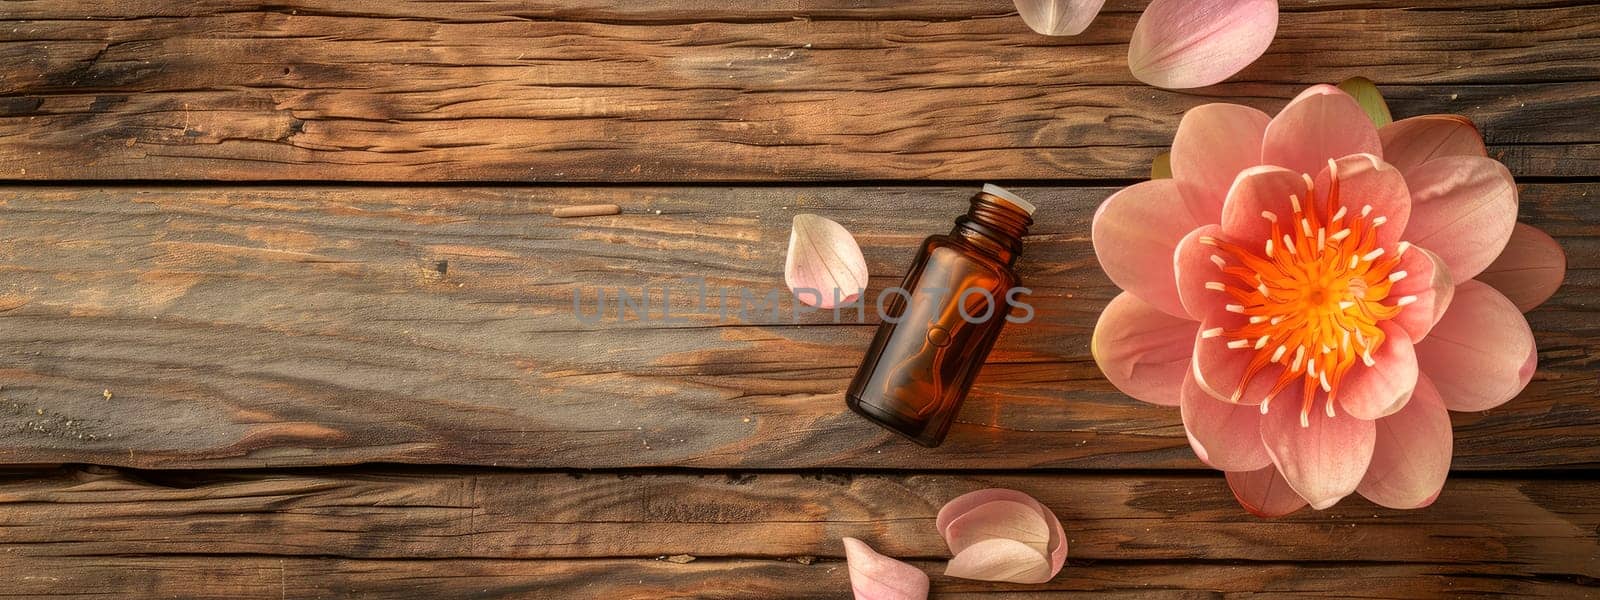 lotus essential oil in a bottle. Selective focus. by yanadjana